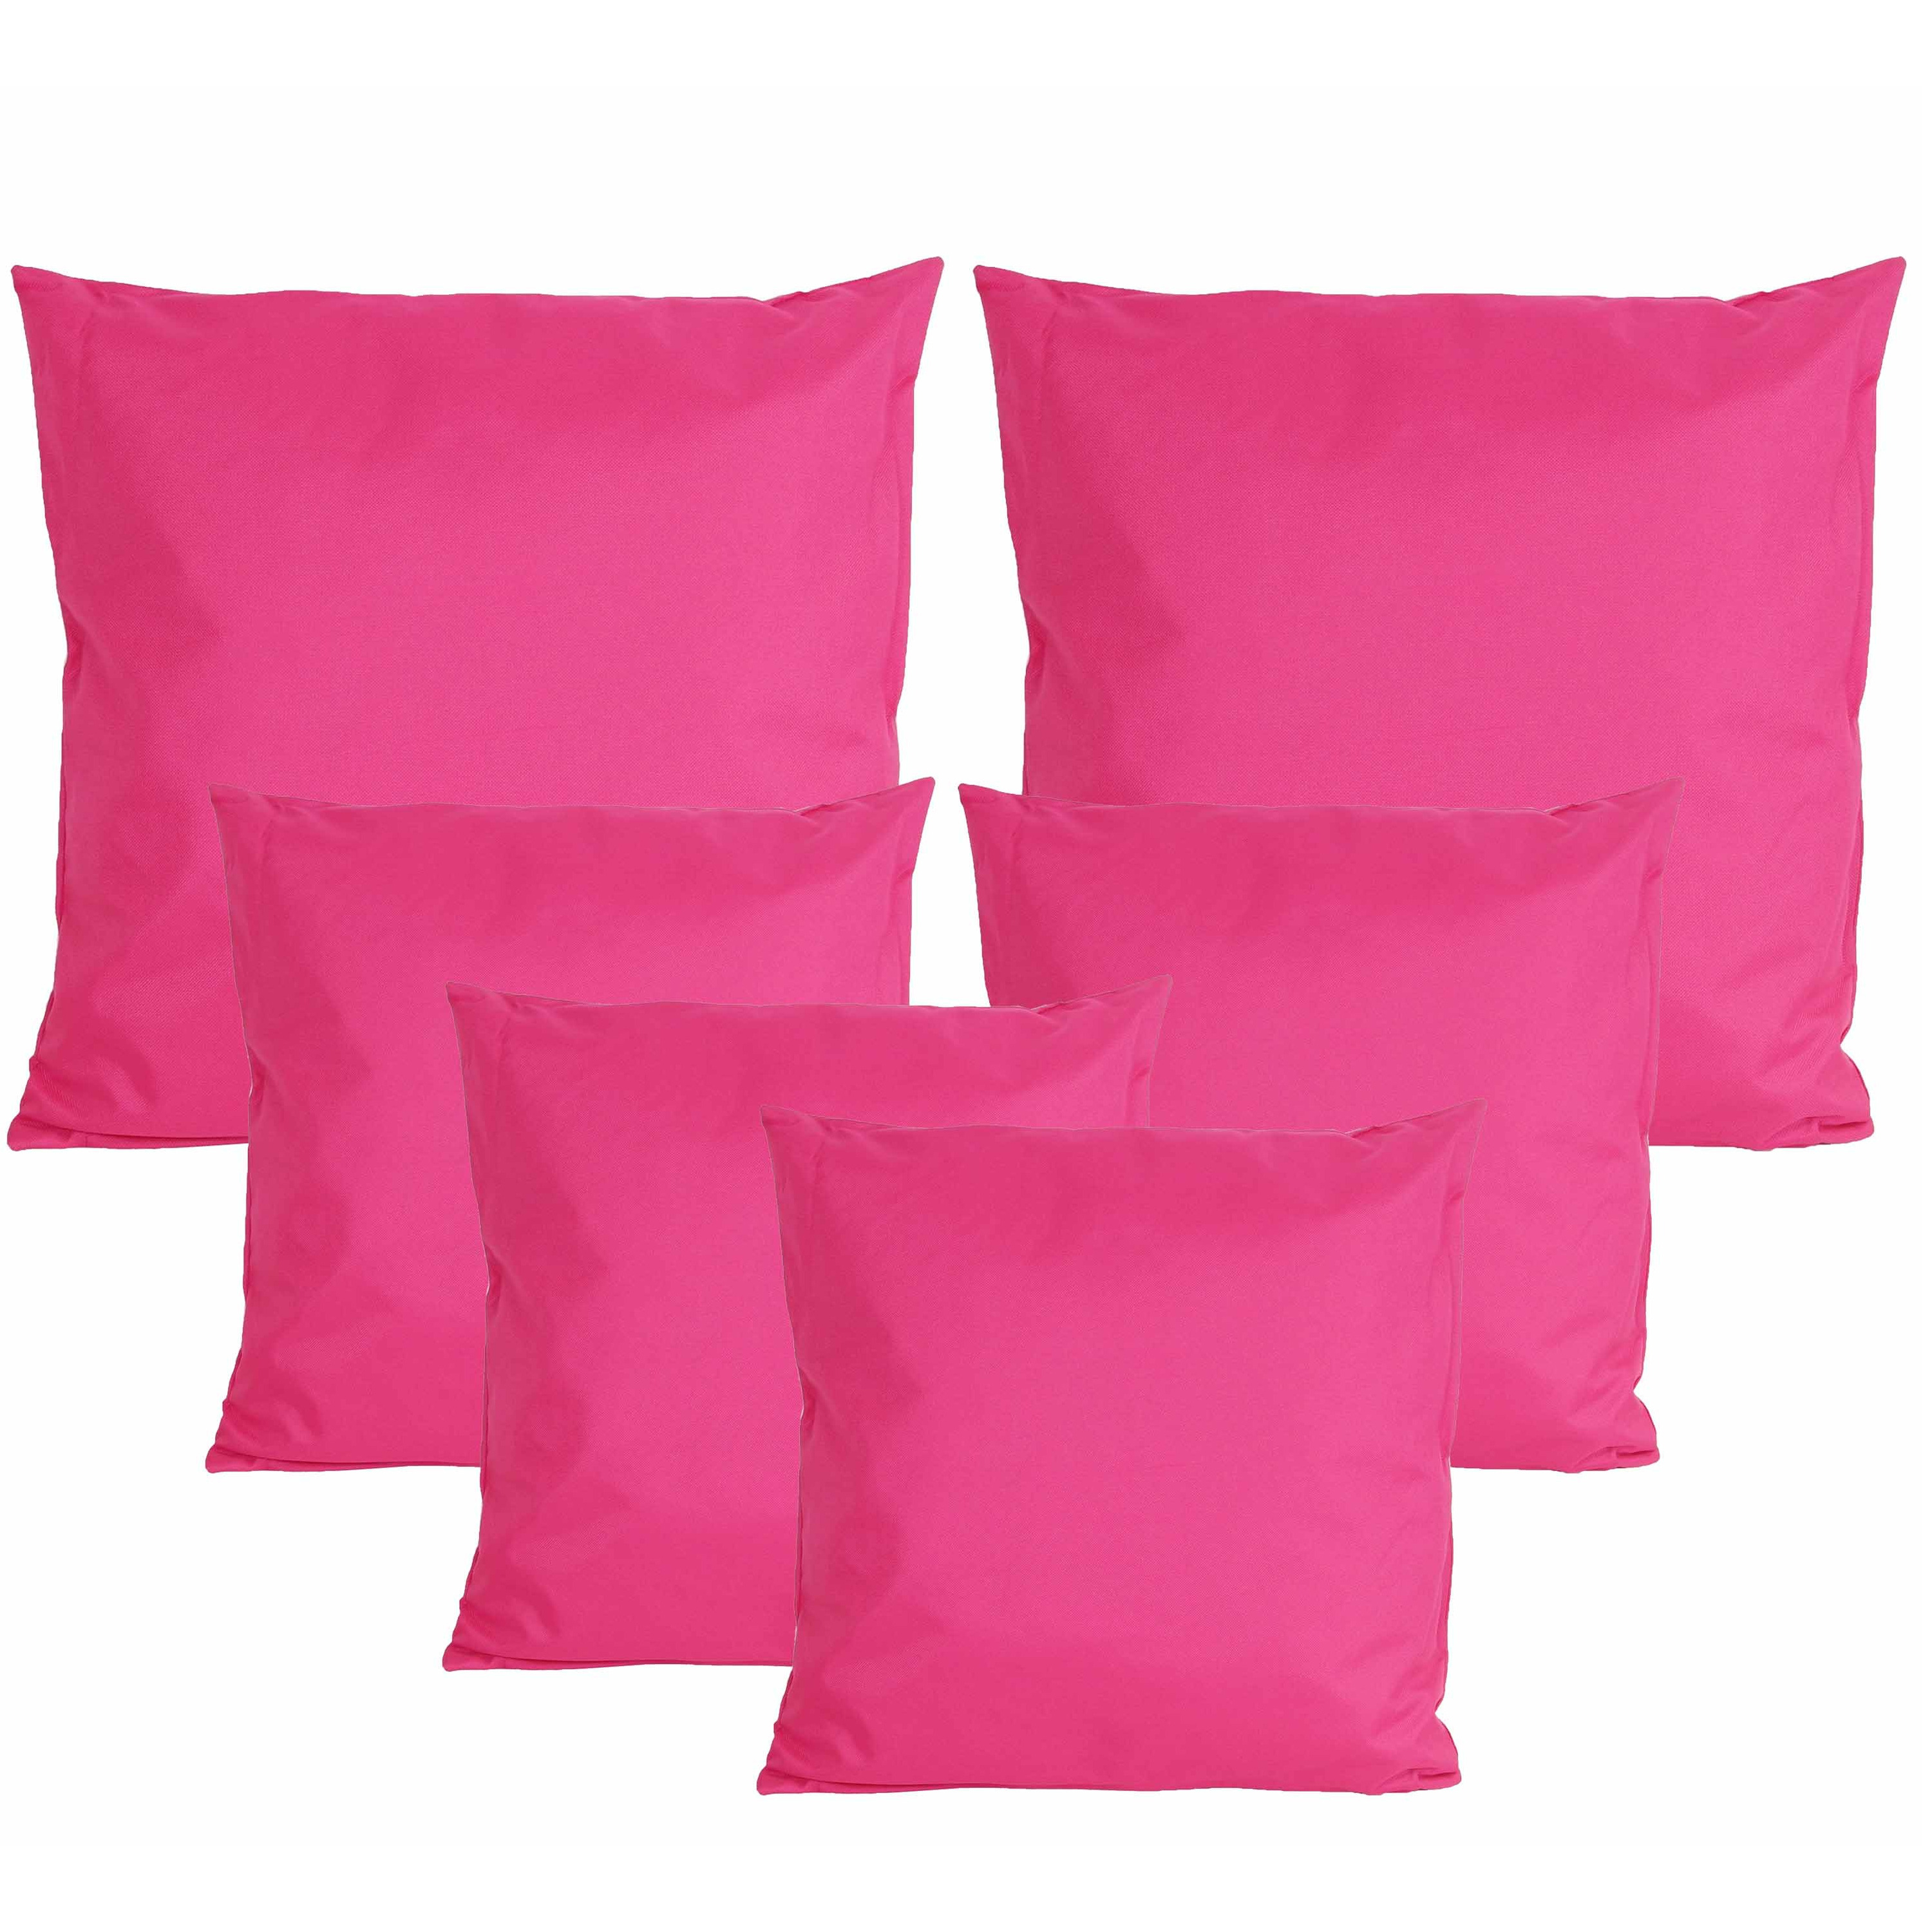 Bank-tuin kussens set binnen-buiten 6x stuks fuchsia roze In 2 formaten